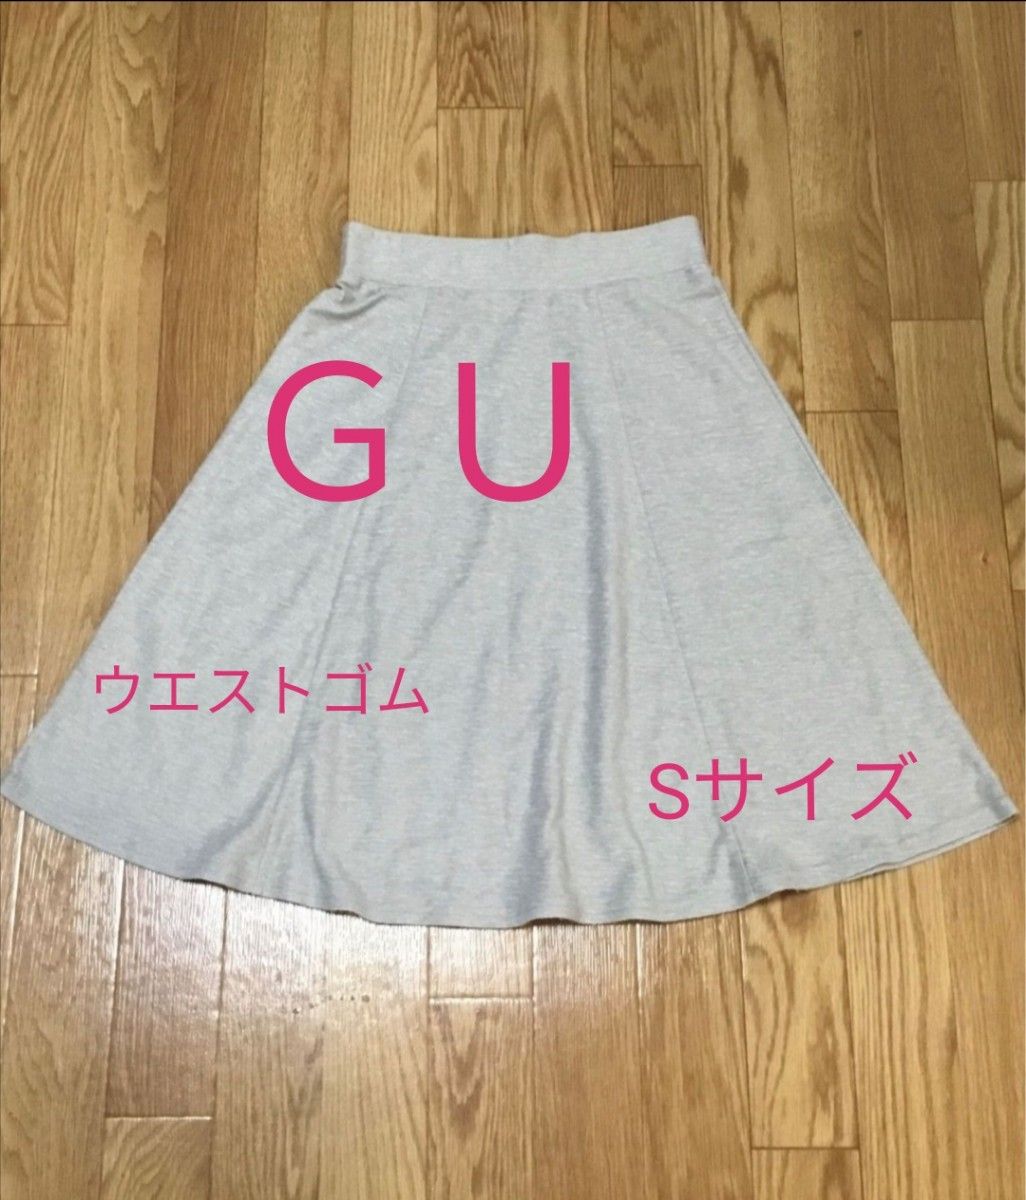 ◆ GU ライトグレー ウエストゴム スカート Sサイズ ☆ 薄グレー